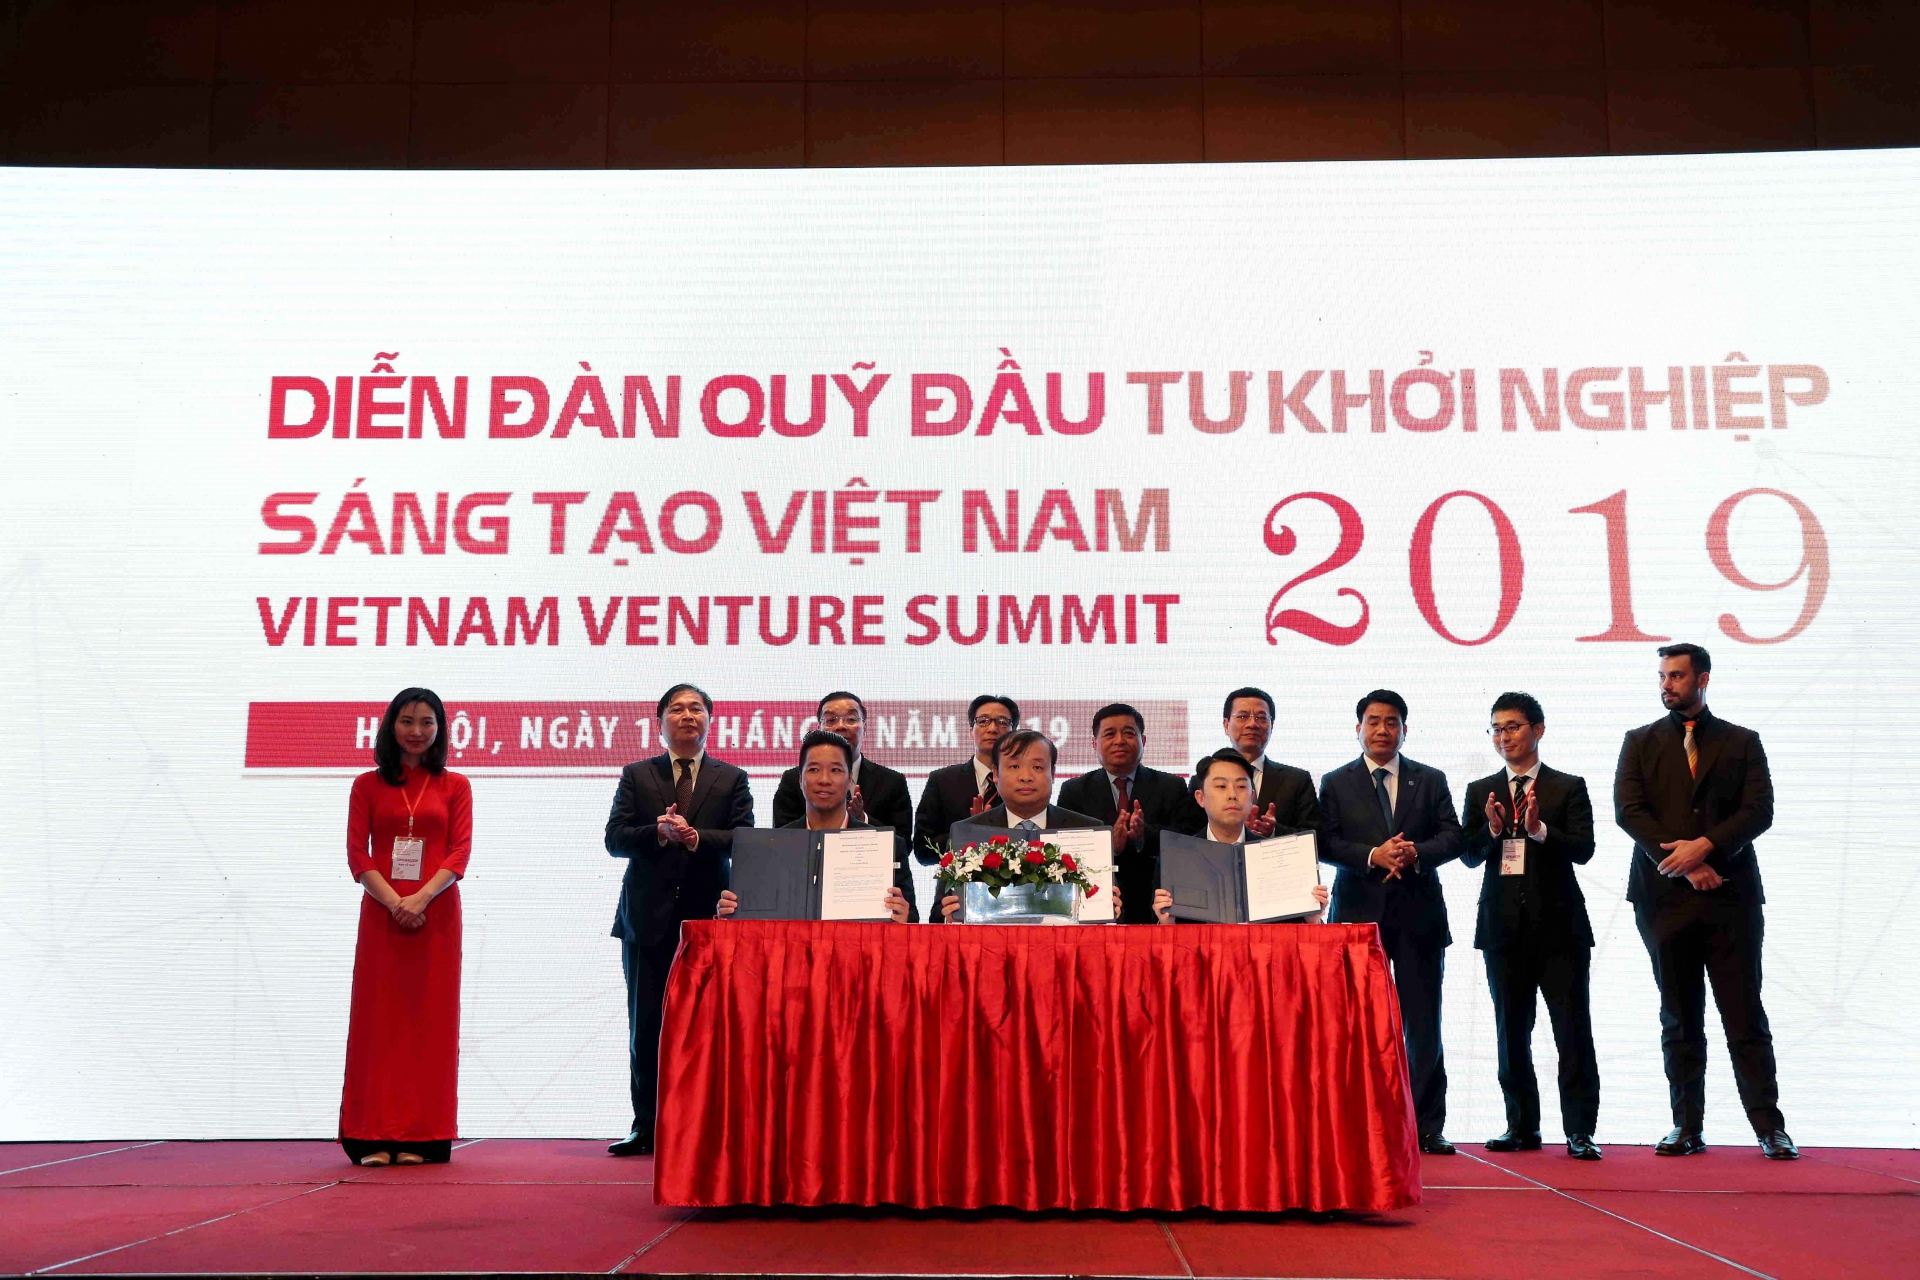 Almost half a billion dollar earmarked for Vietnamese startups